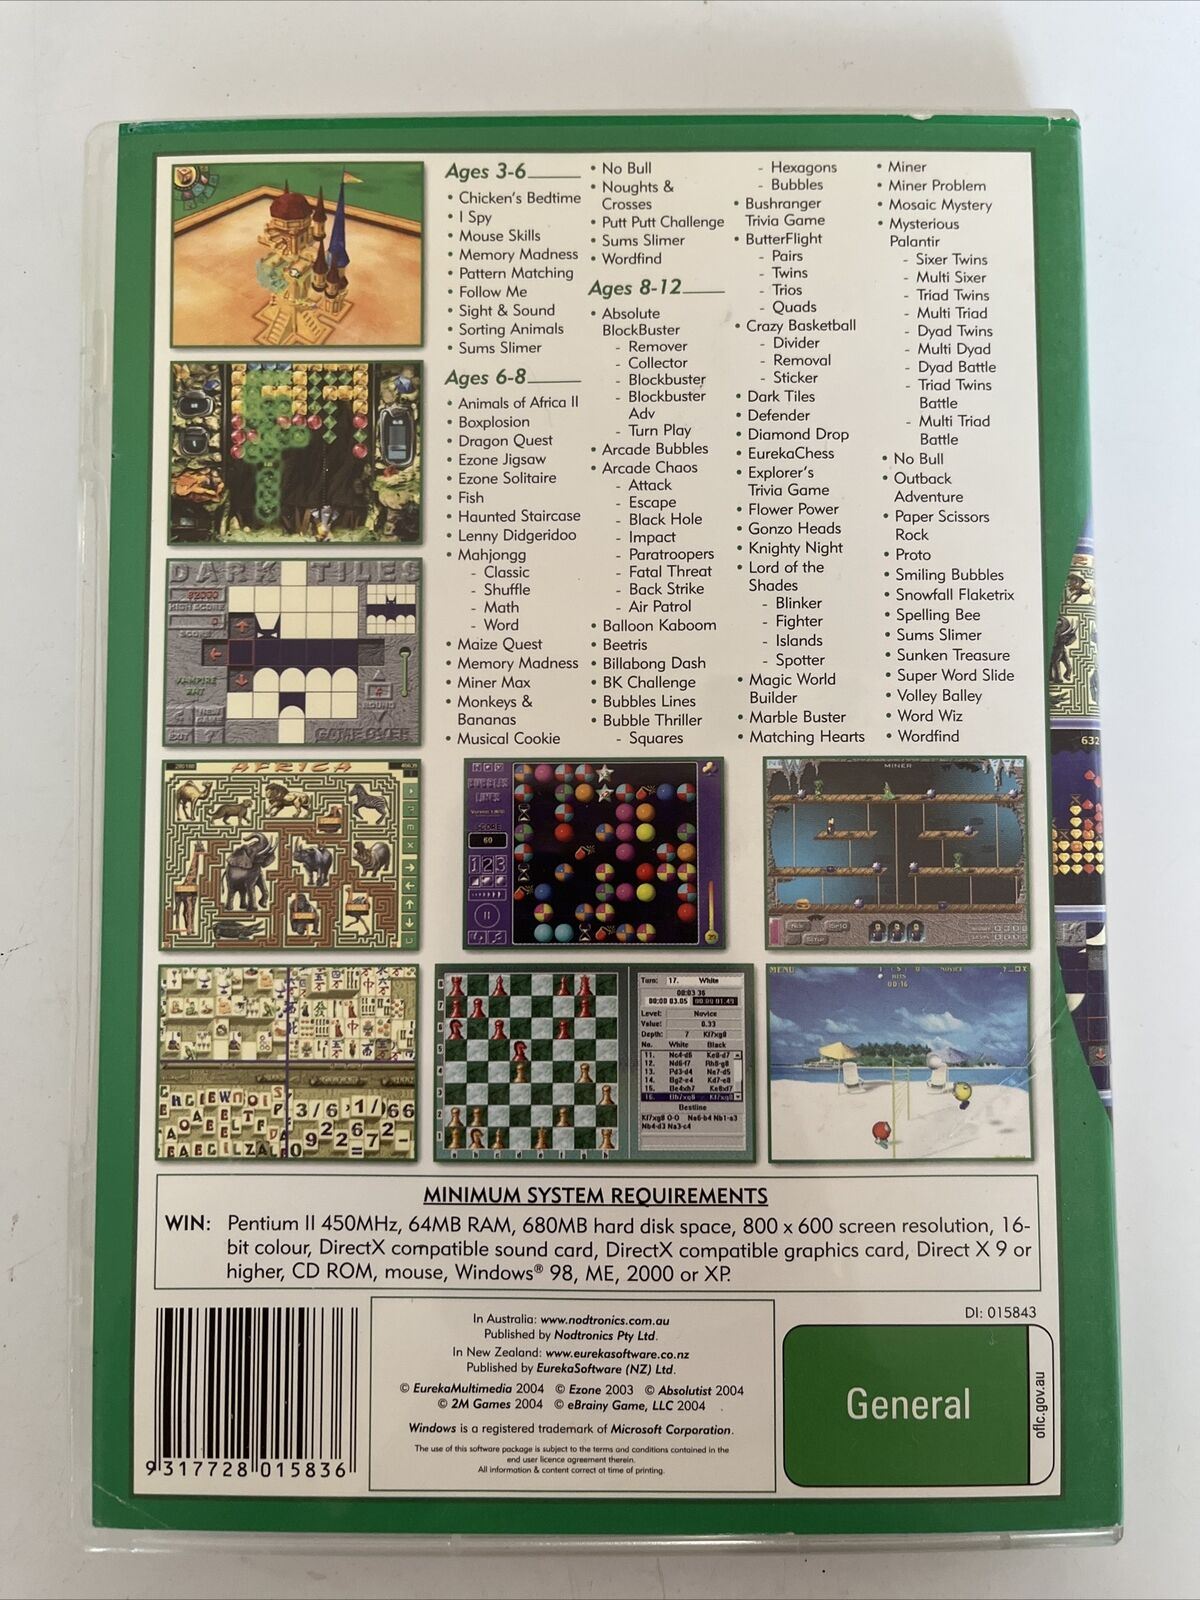 101 Kid's Brainy Games - PC Windows Game Nodtronics Age 3-12+